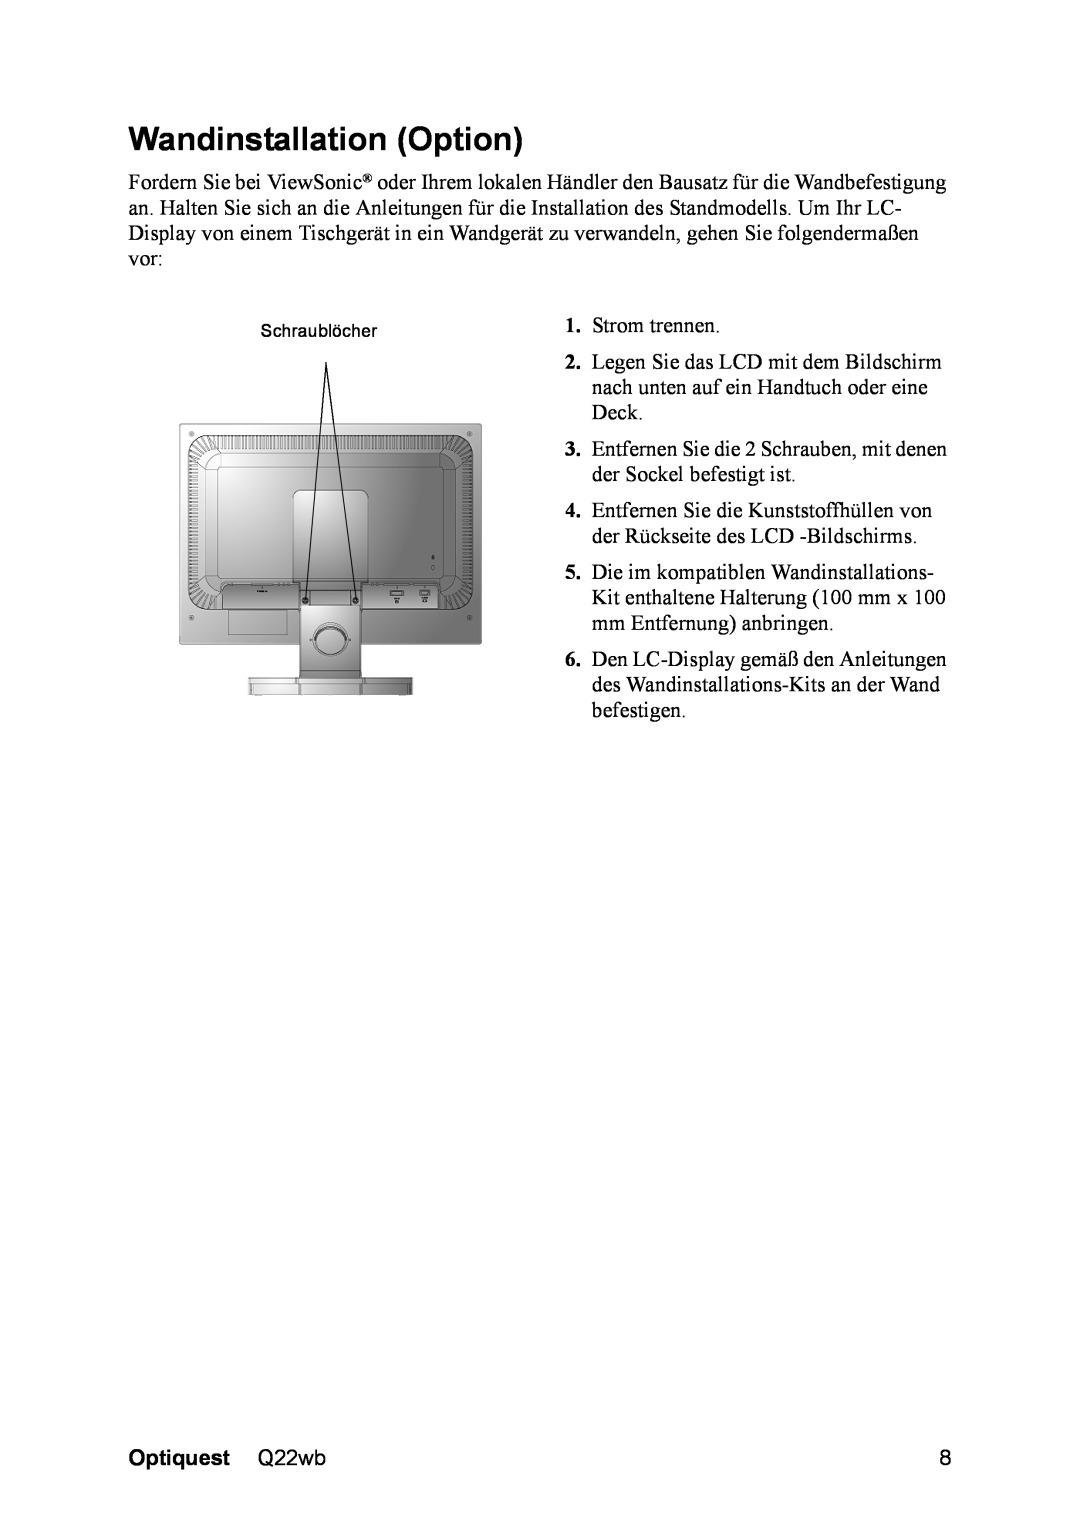 ViewSonic VS11725 manual Wandinstallation Option, Optiquest Q22wb 